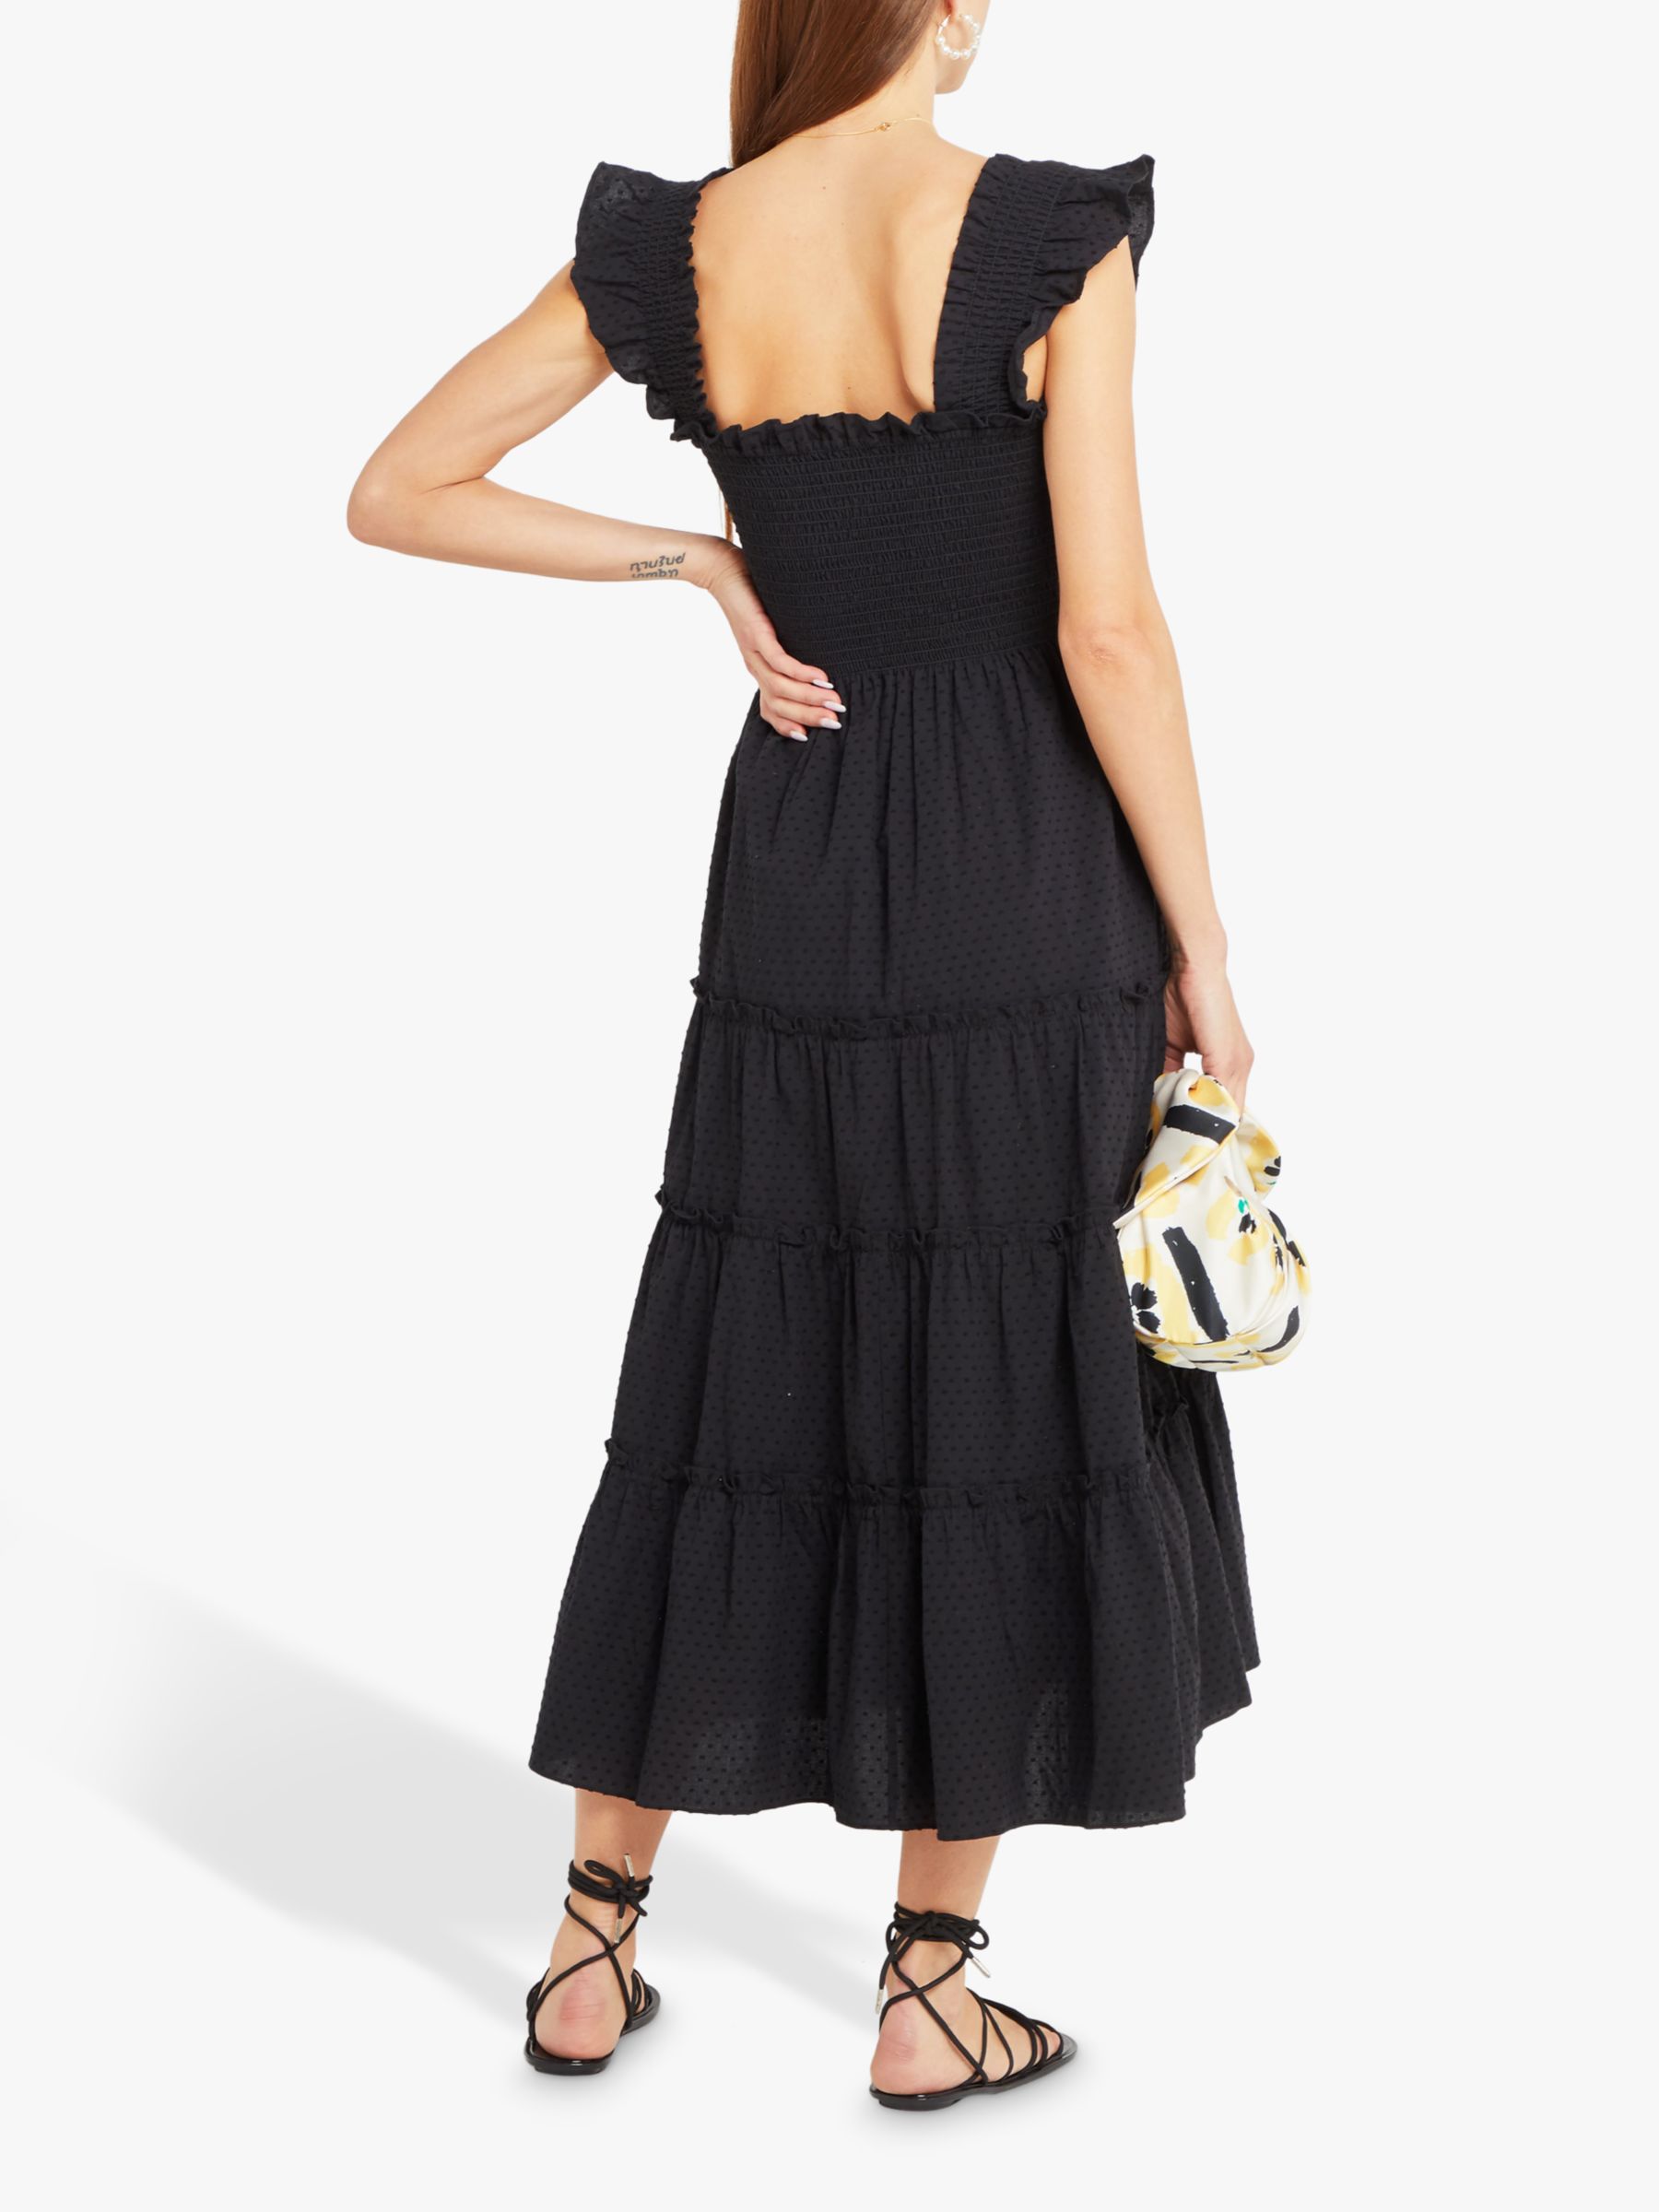 kourt Calypso Smocked Bodice Midi Dress, Black, XL